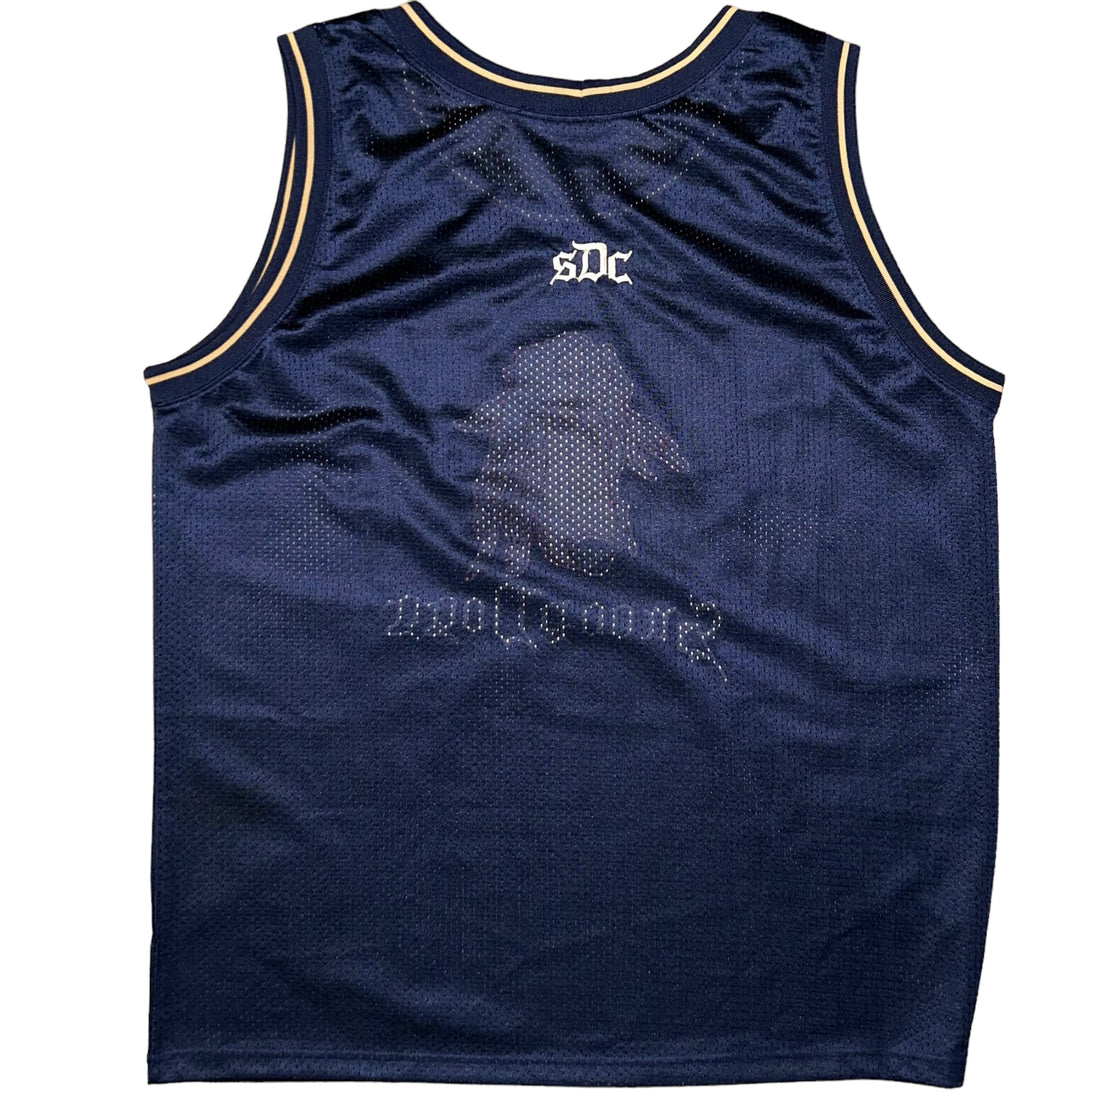 Snoop Dogg Clothing Vest (L/XL)